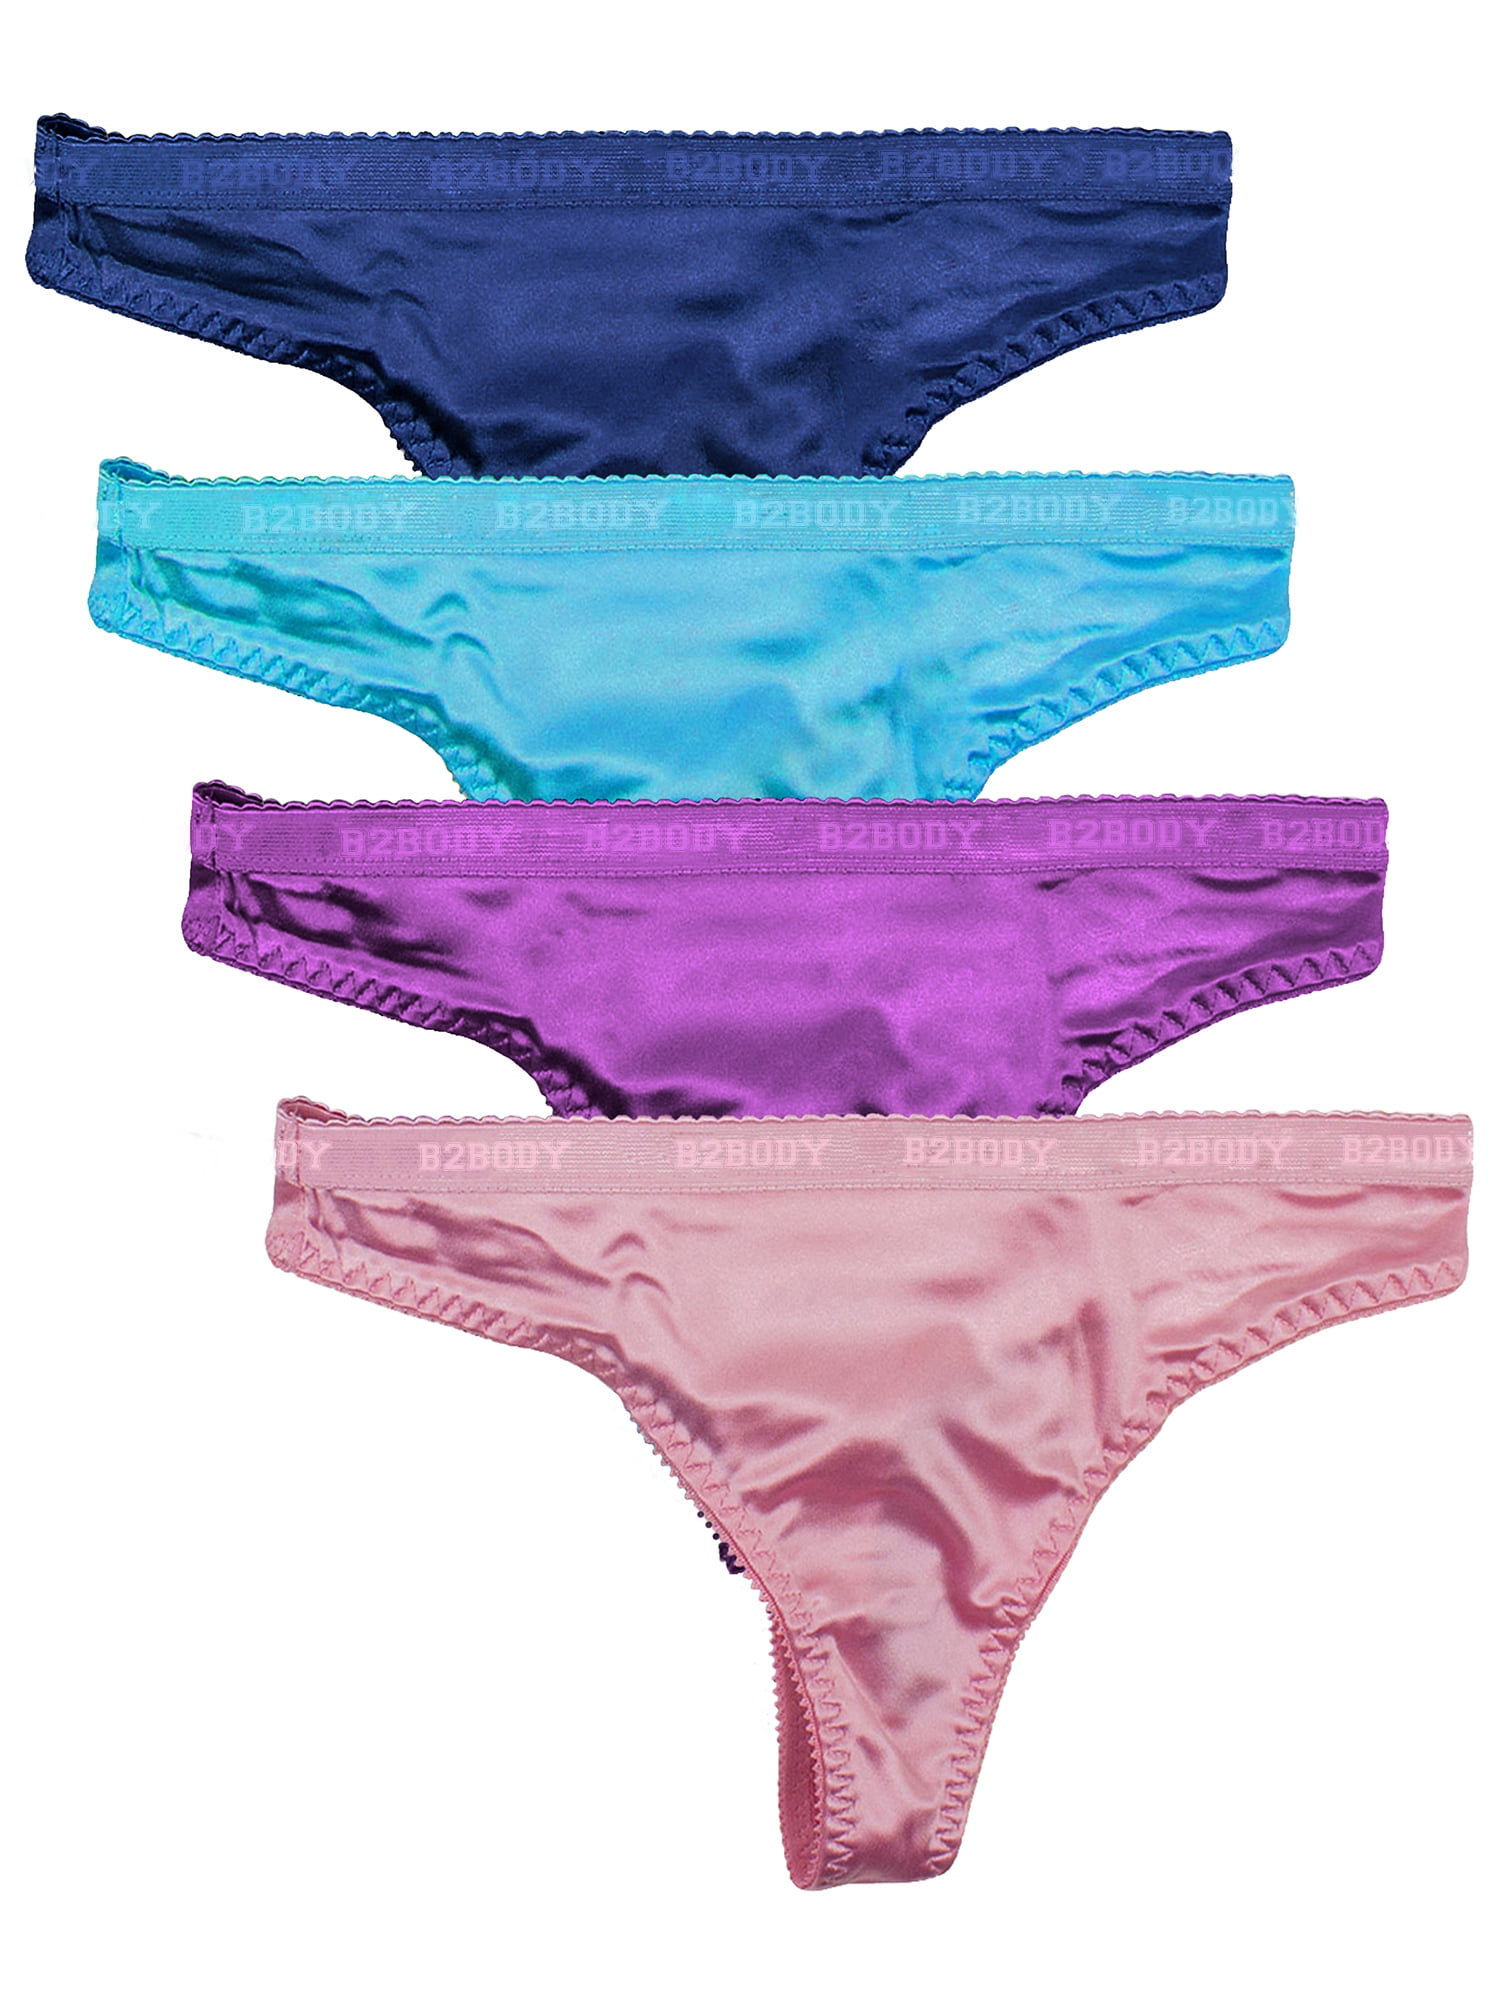 B2BODY Women's Panties Sexy Satin Thong Underwear Small to Plus